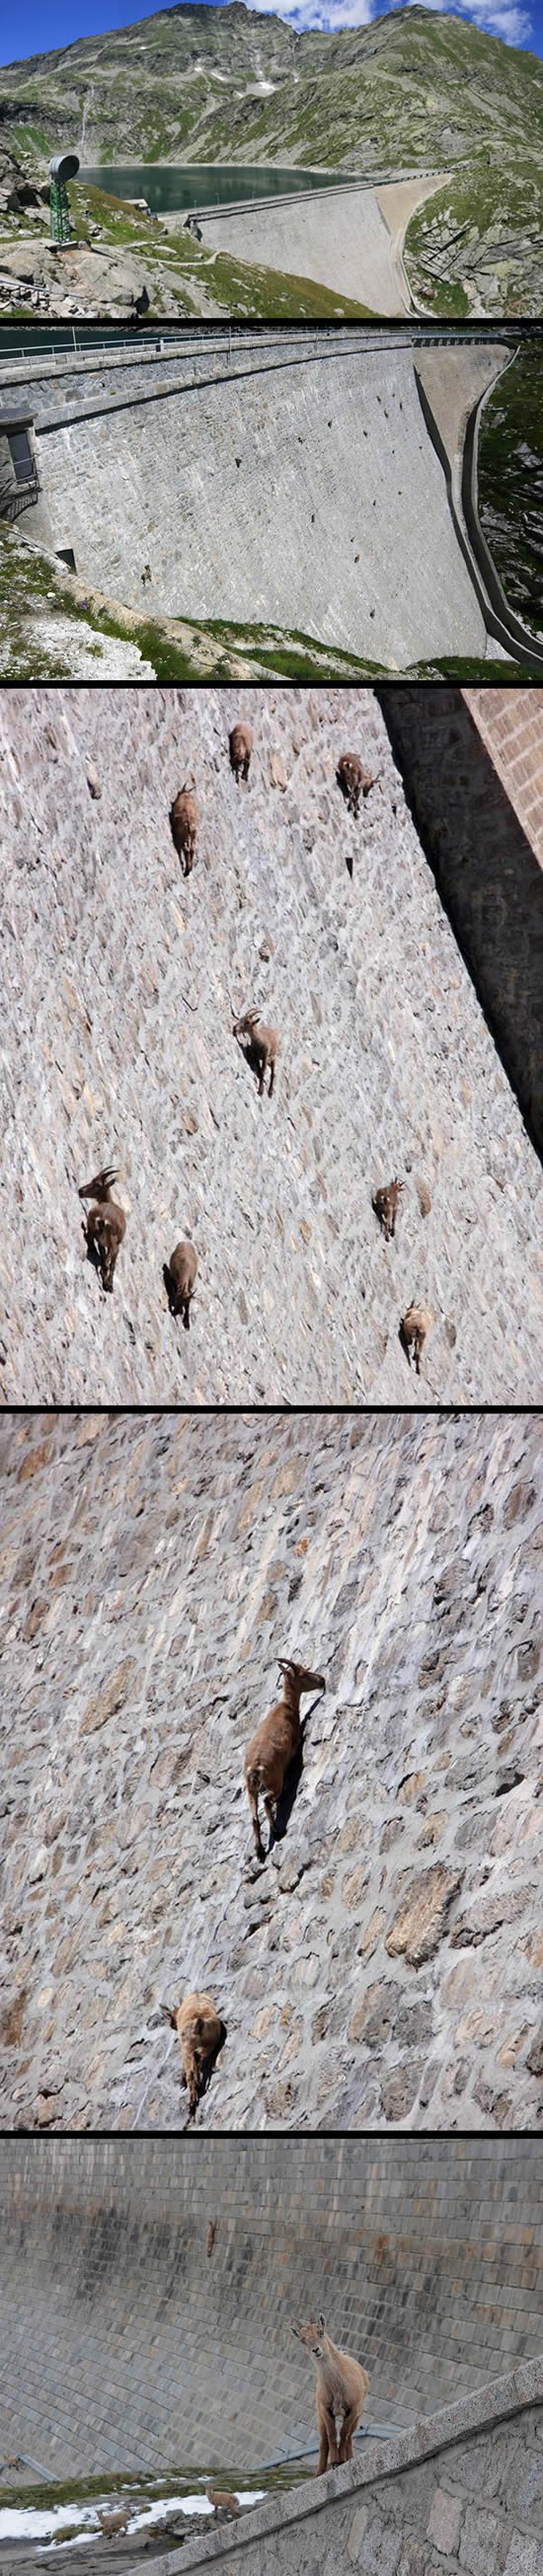 god-damed-goats.jpggod-damed-goats.jpg